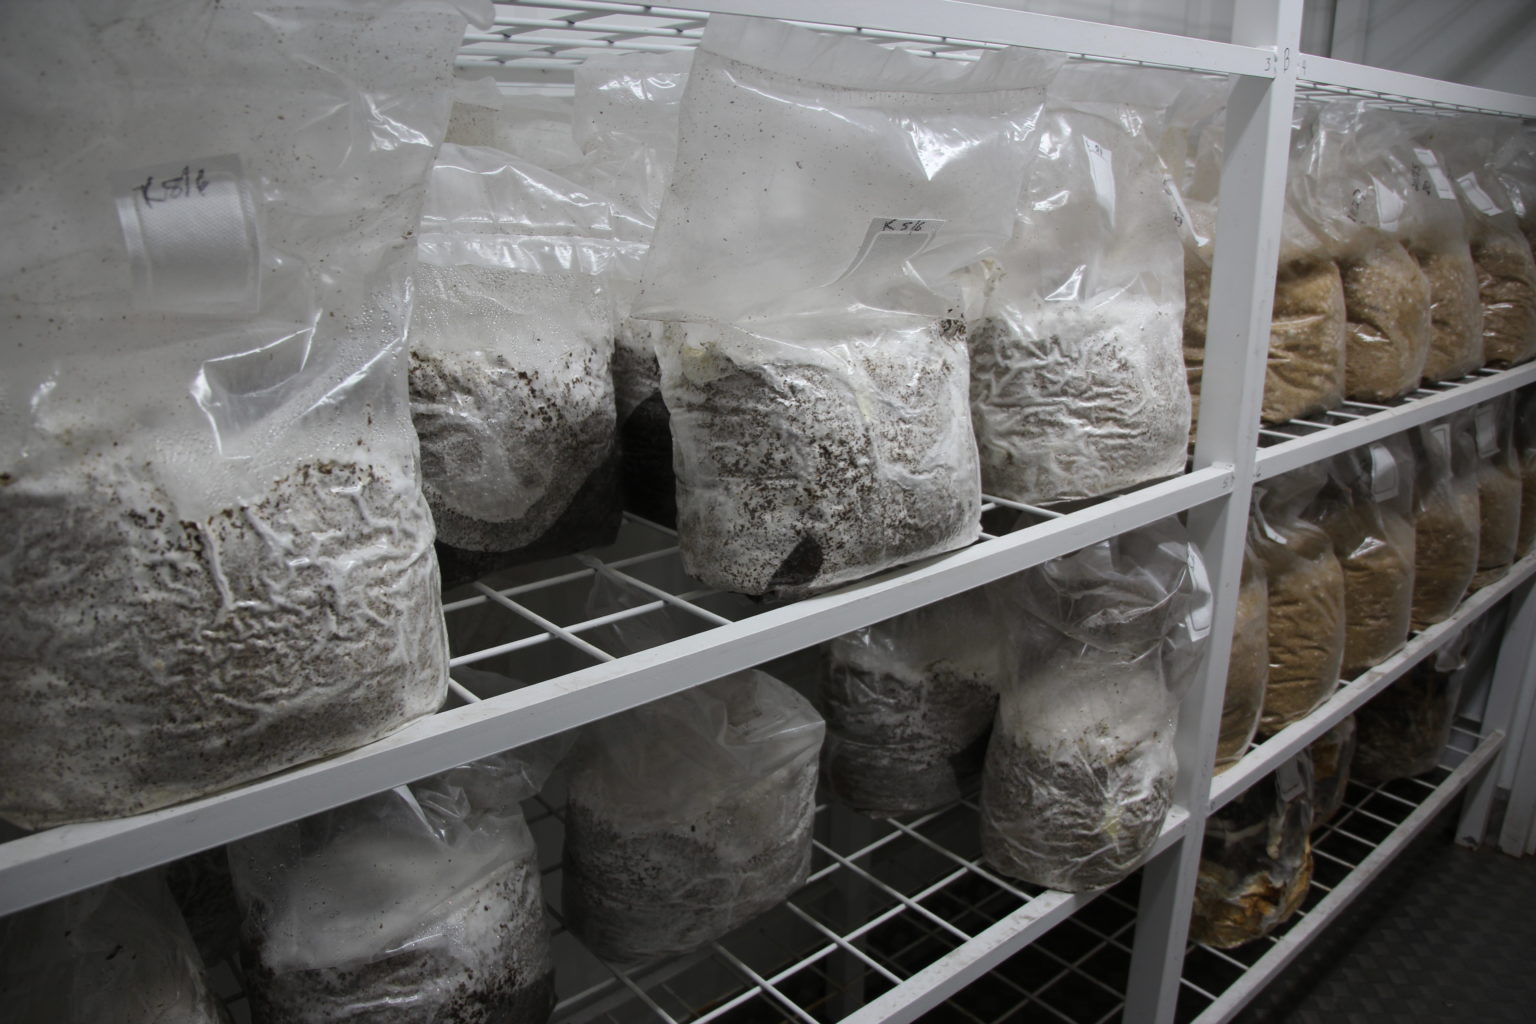 Gourmet Mushroom Farm - World's First Shipping Container Mushrooms